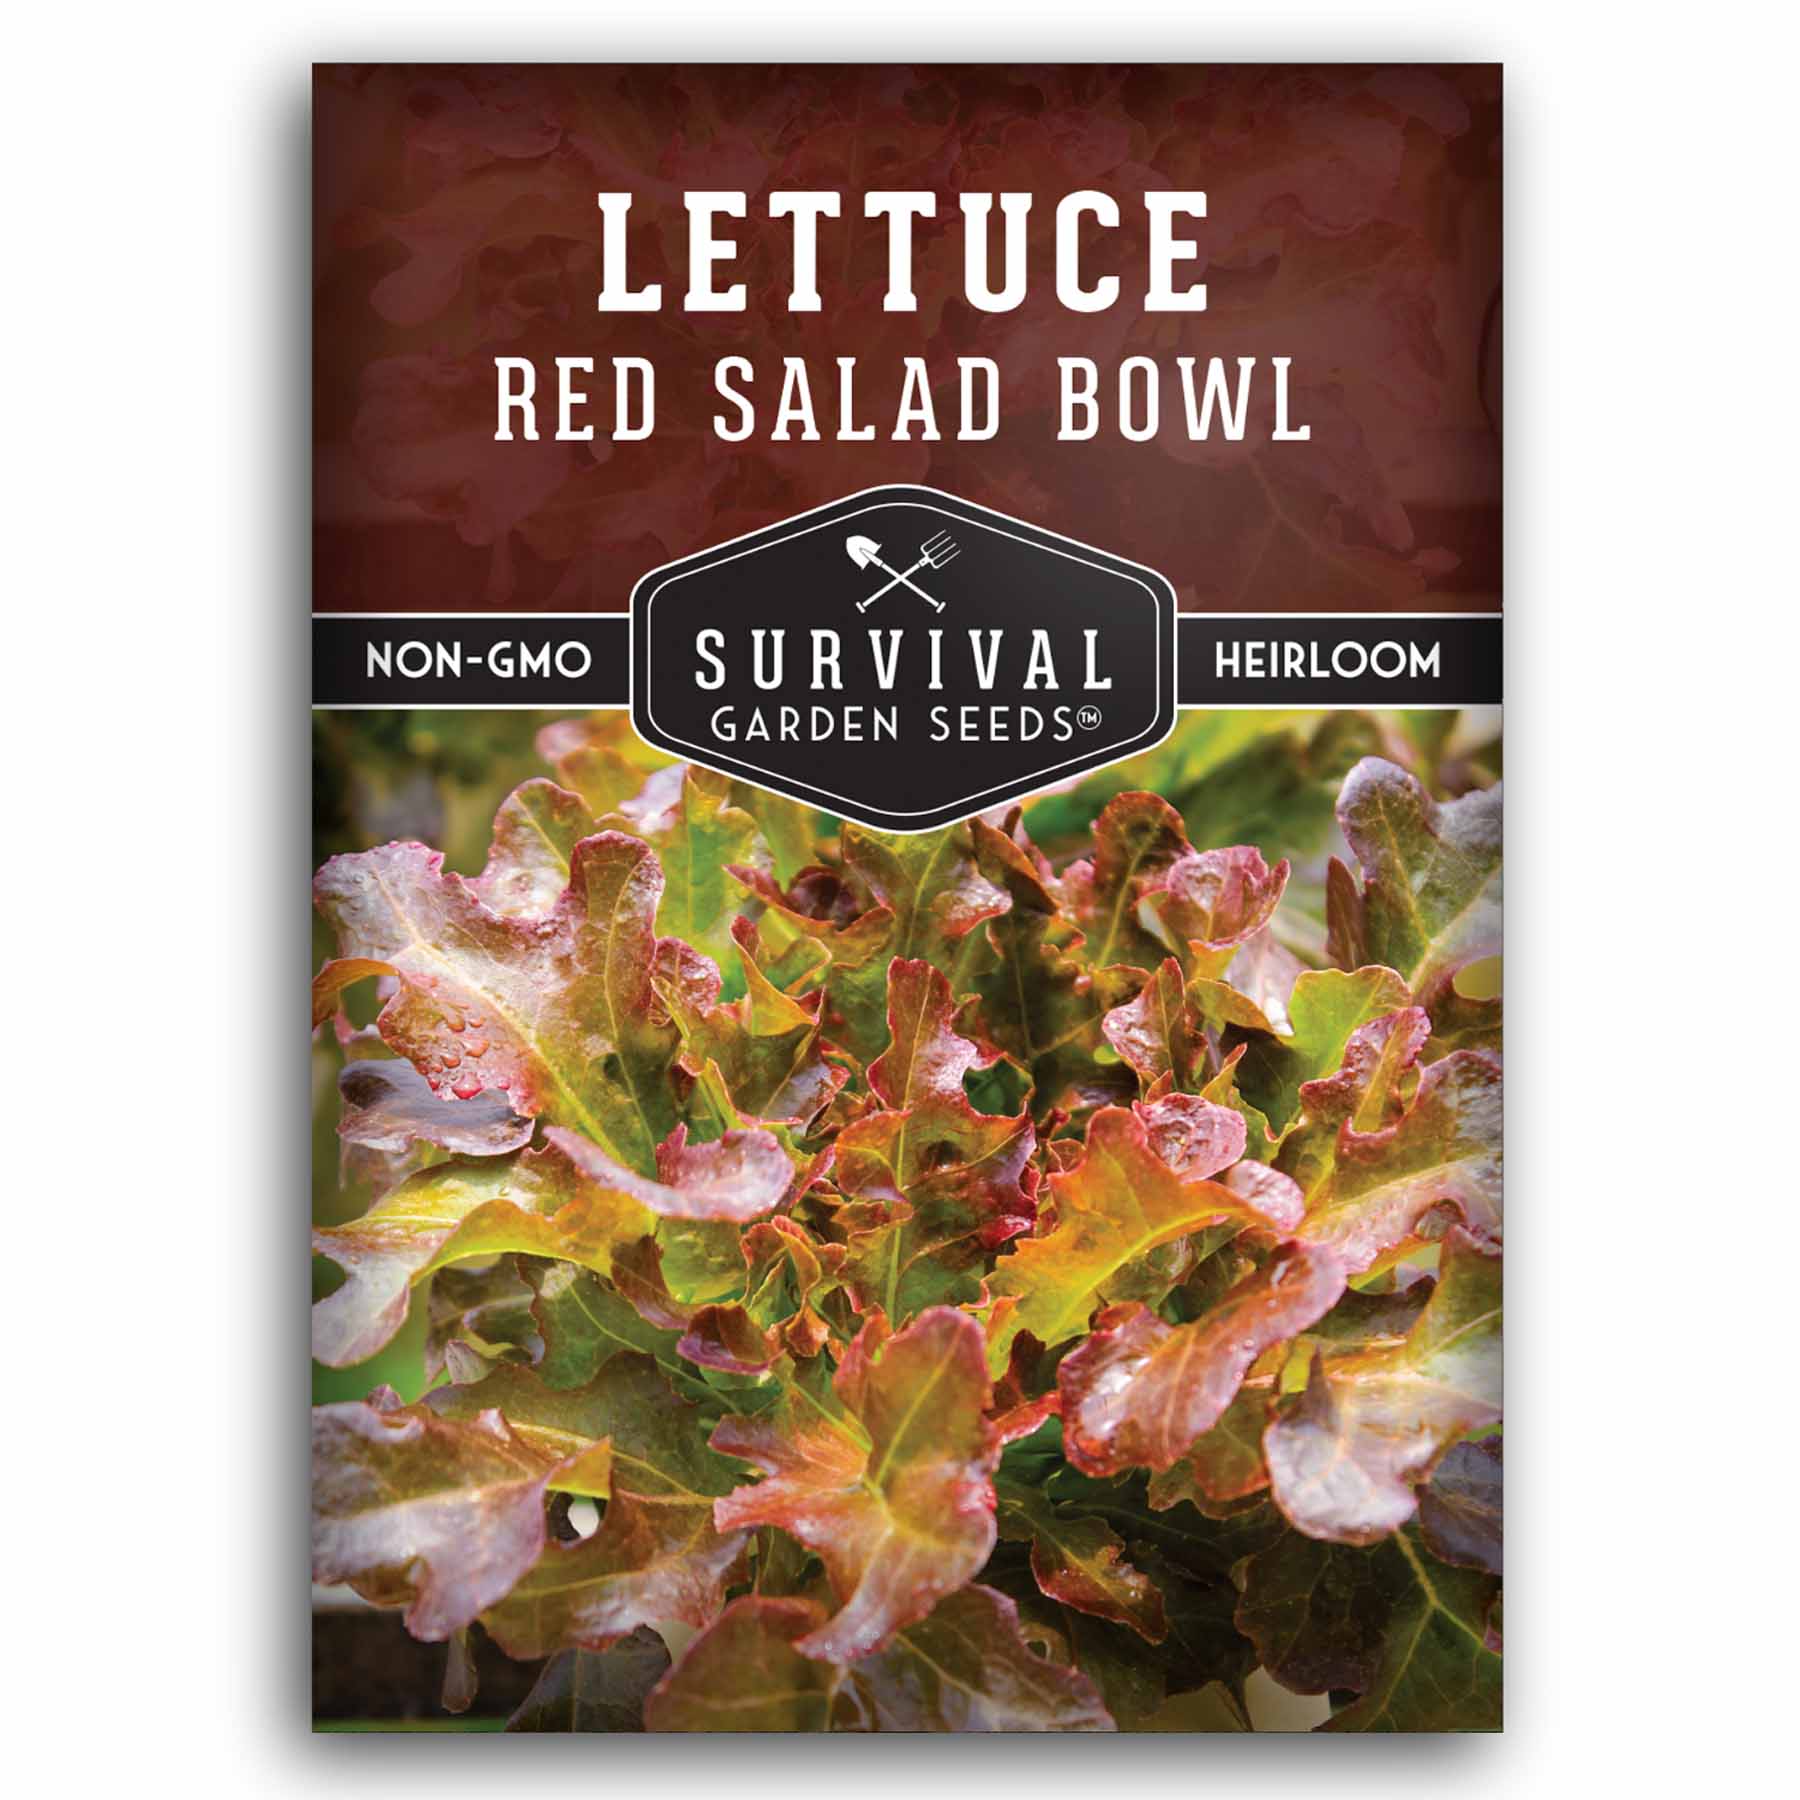 1 packet of Red Salad Bowl lettuce seeds